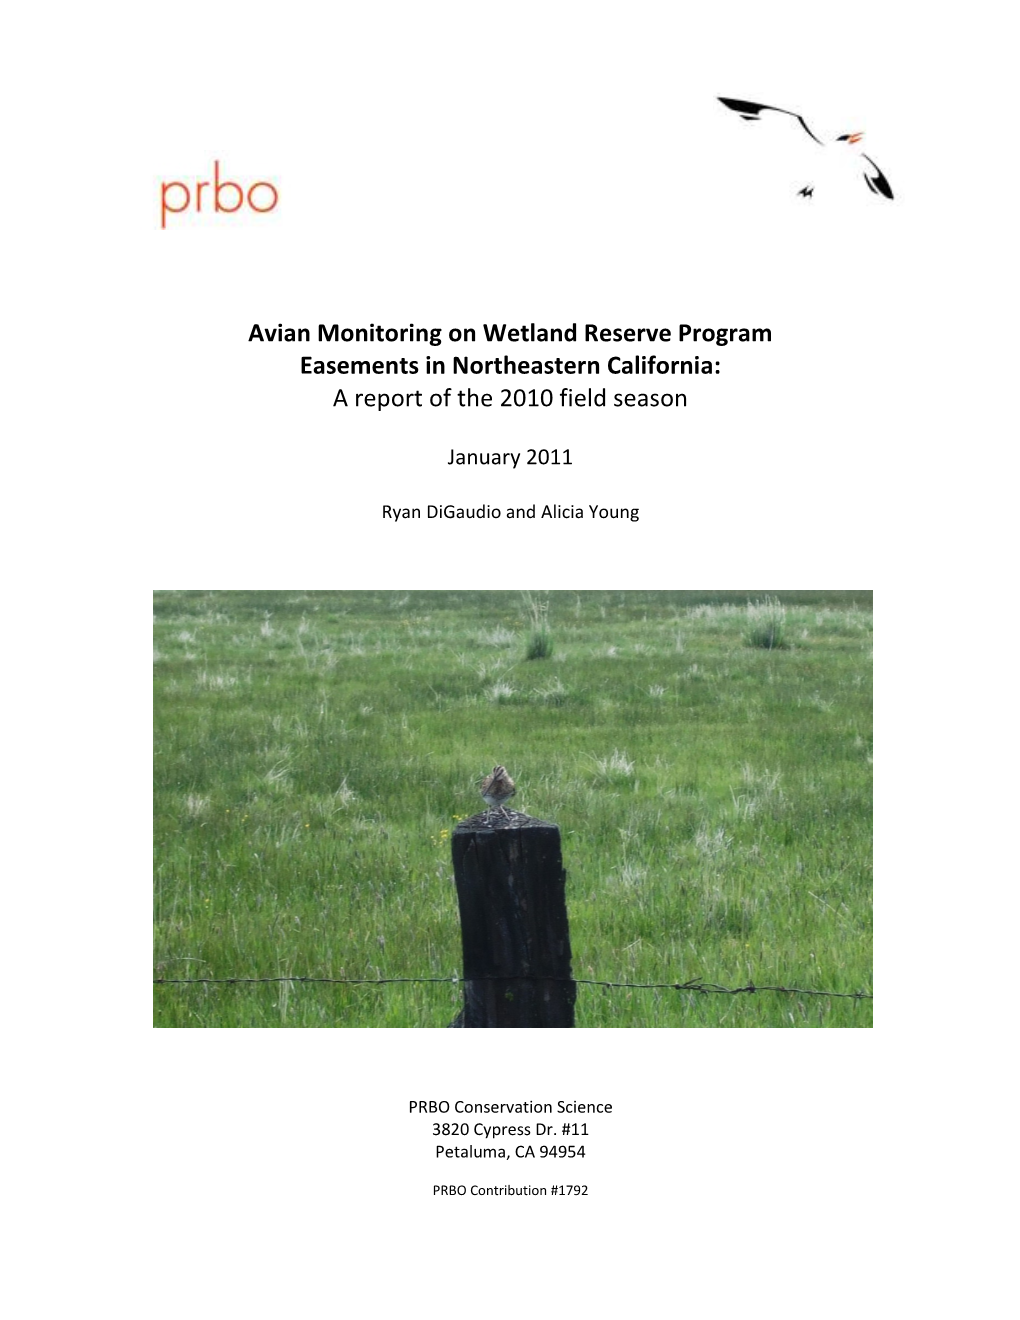 Avian Monitoring on Wetland Reserve Program Easements in Northeastern California: a Report of the 2010 Field Season